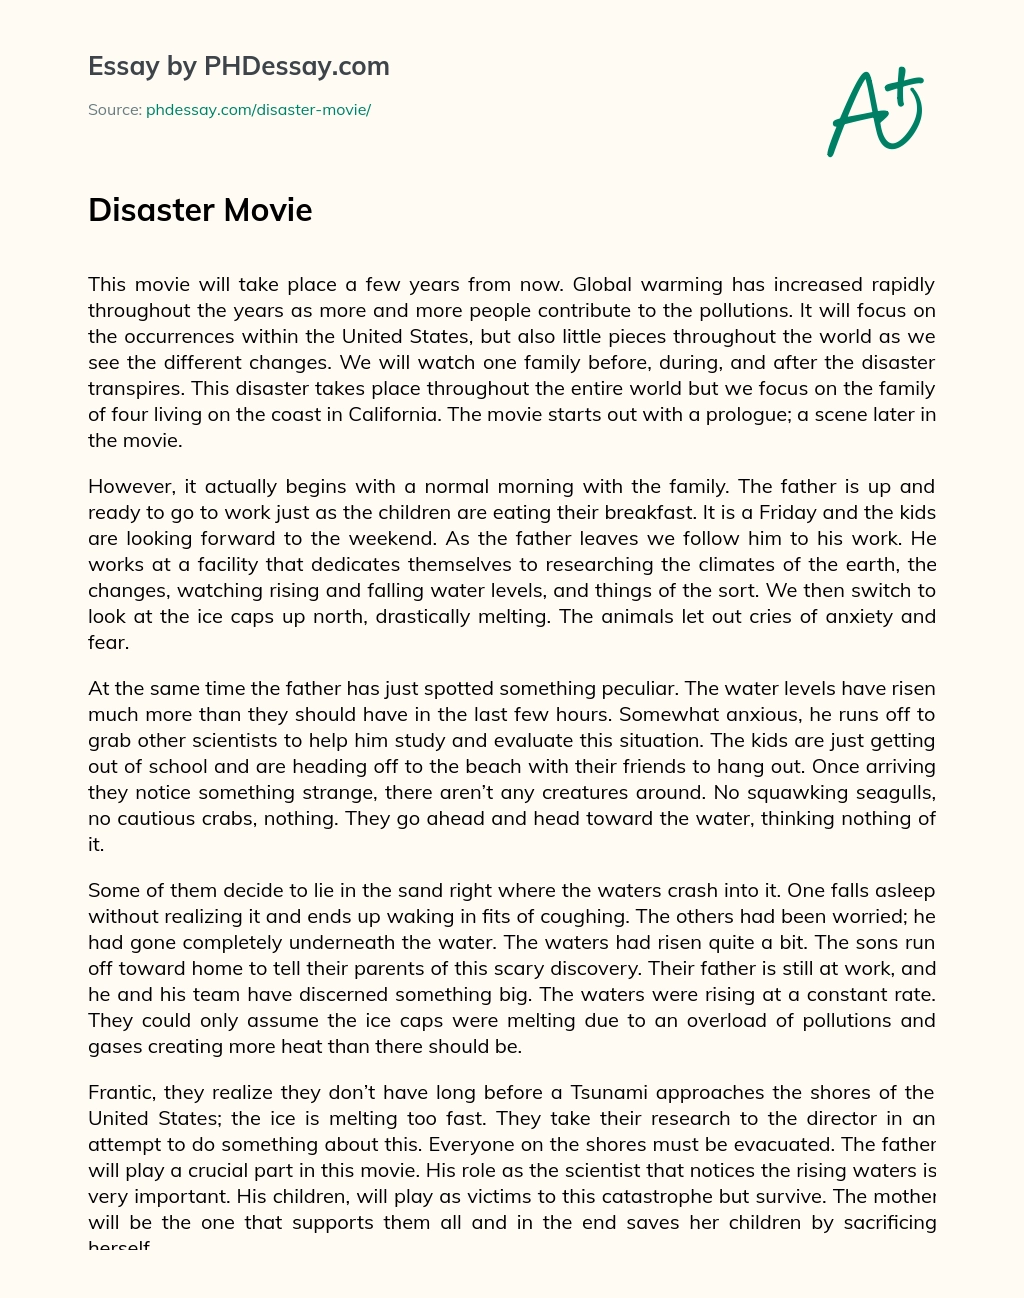 Disaster Movie essay